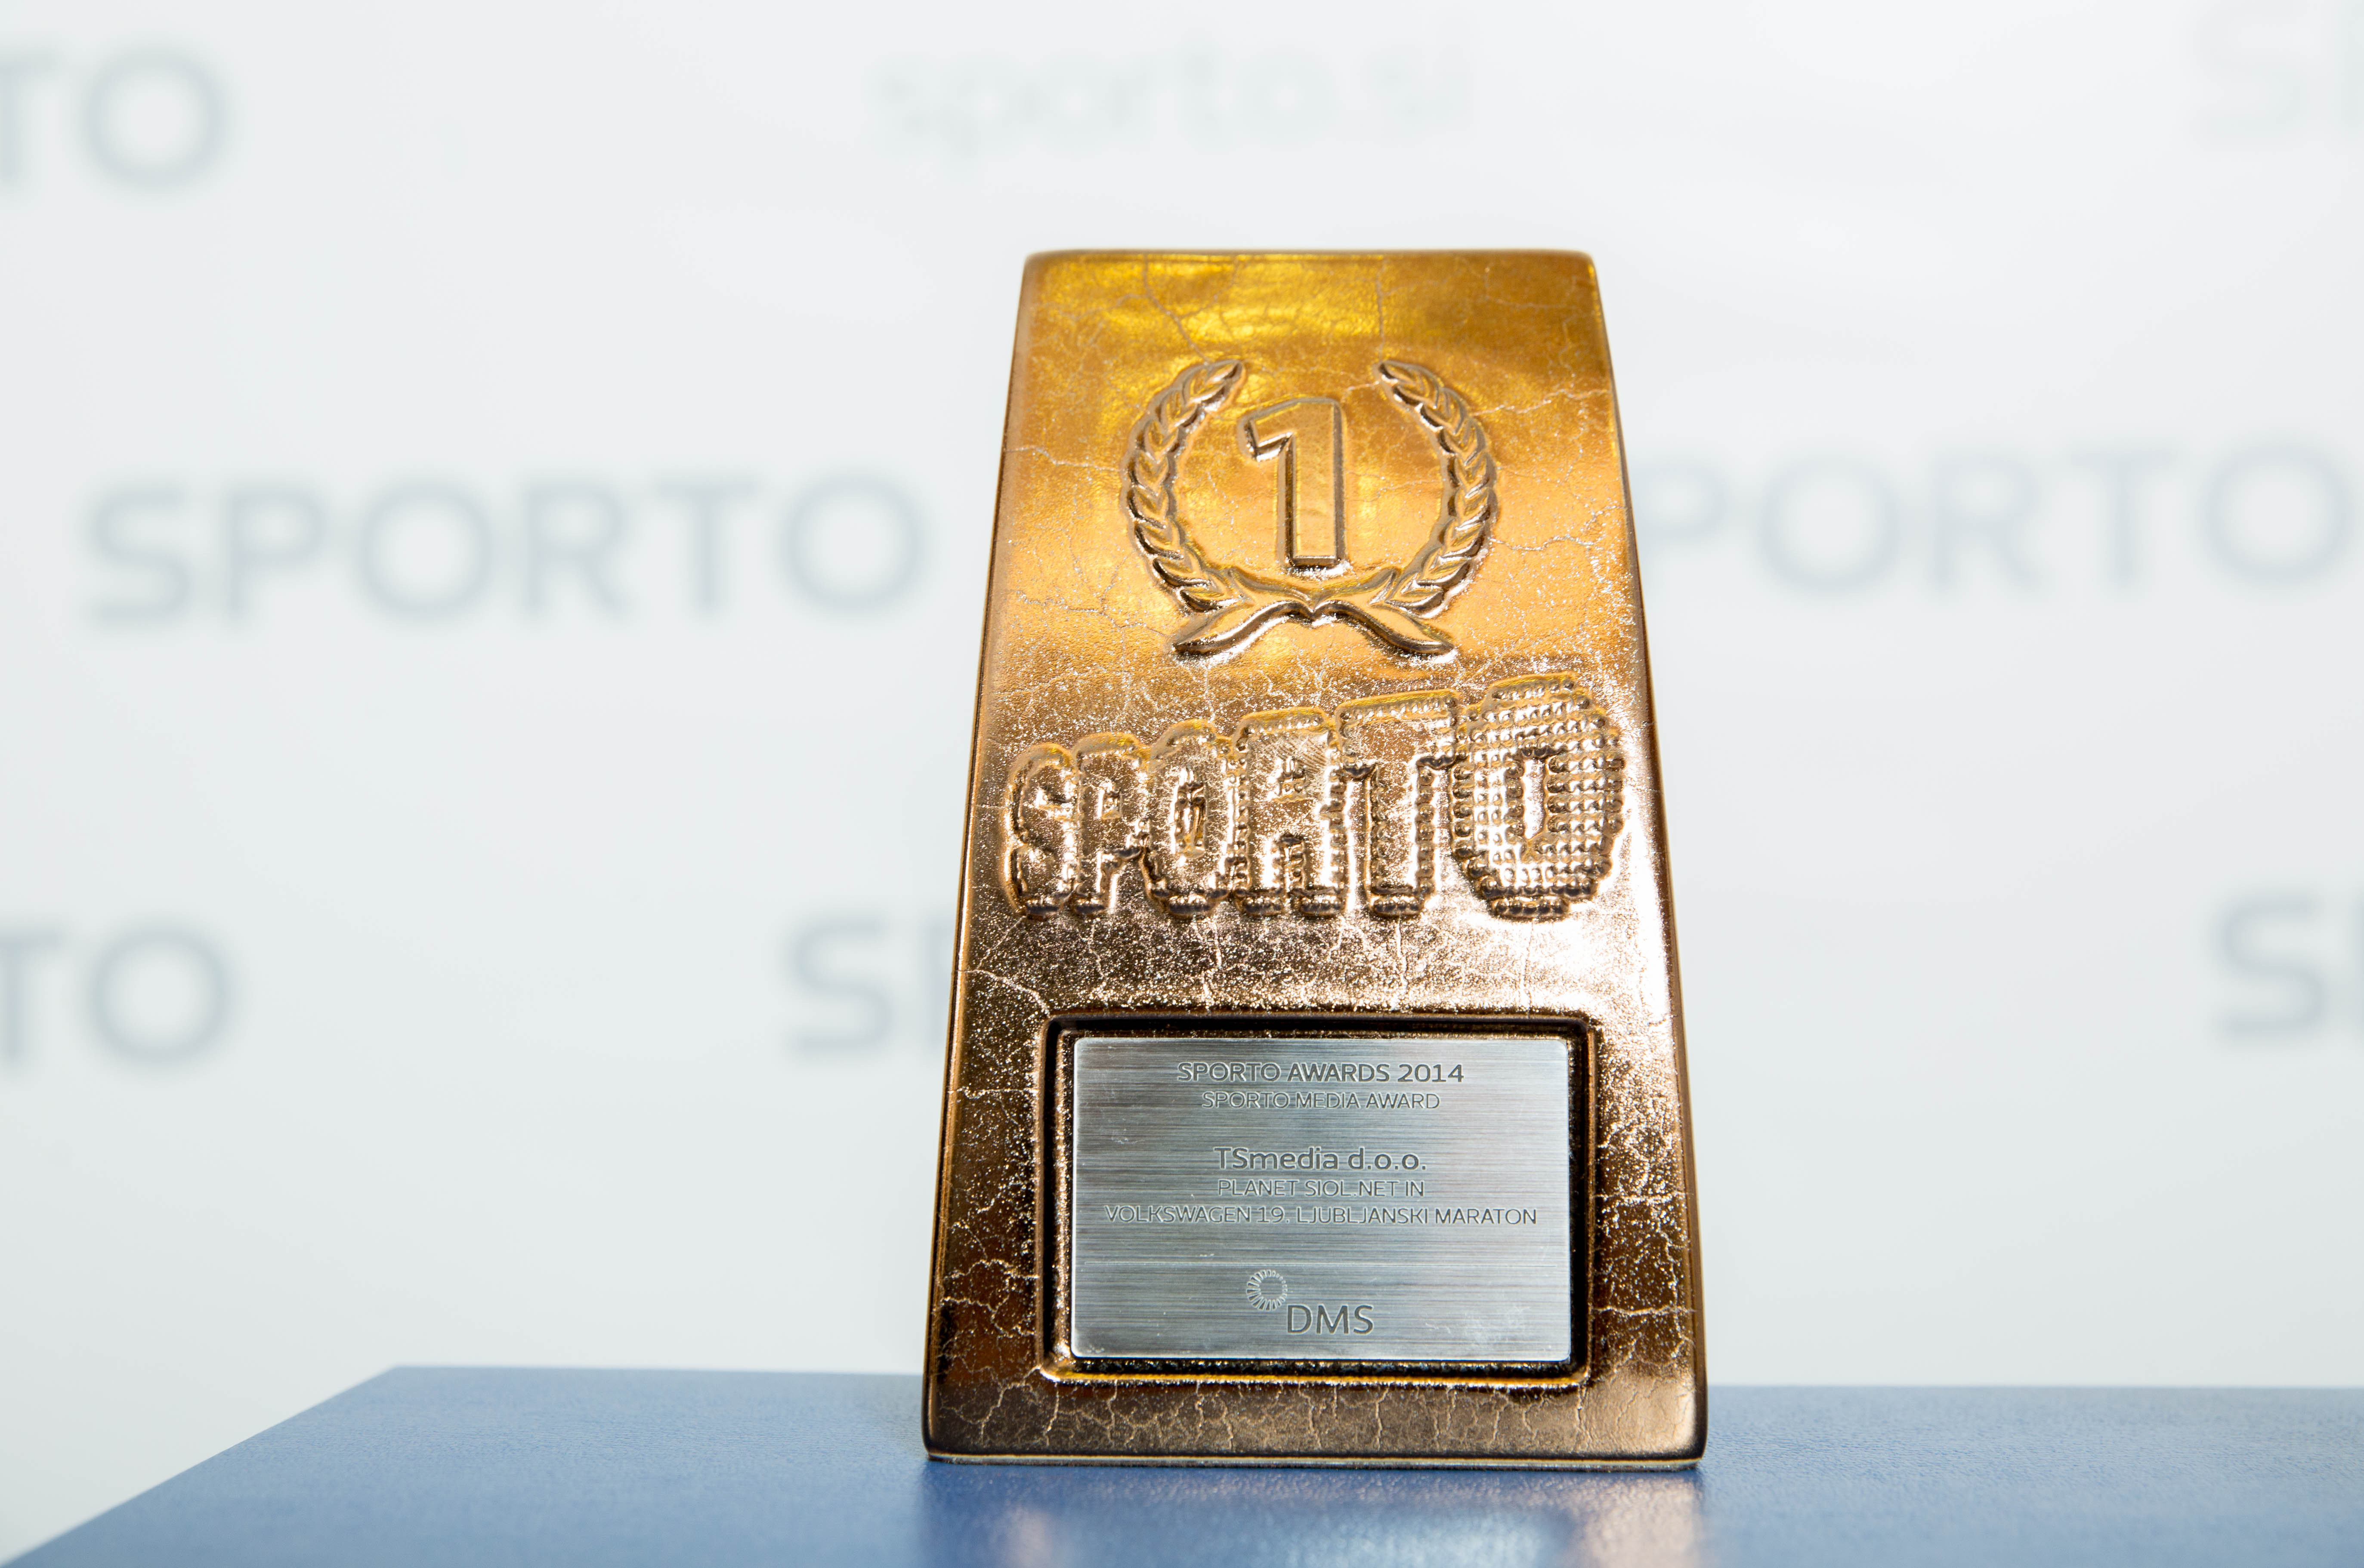 SLO, Sporto 2014 - sports marketing and sponsorship conference